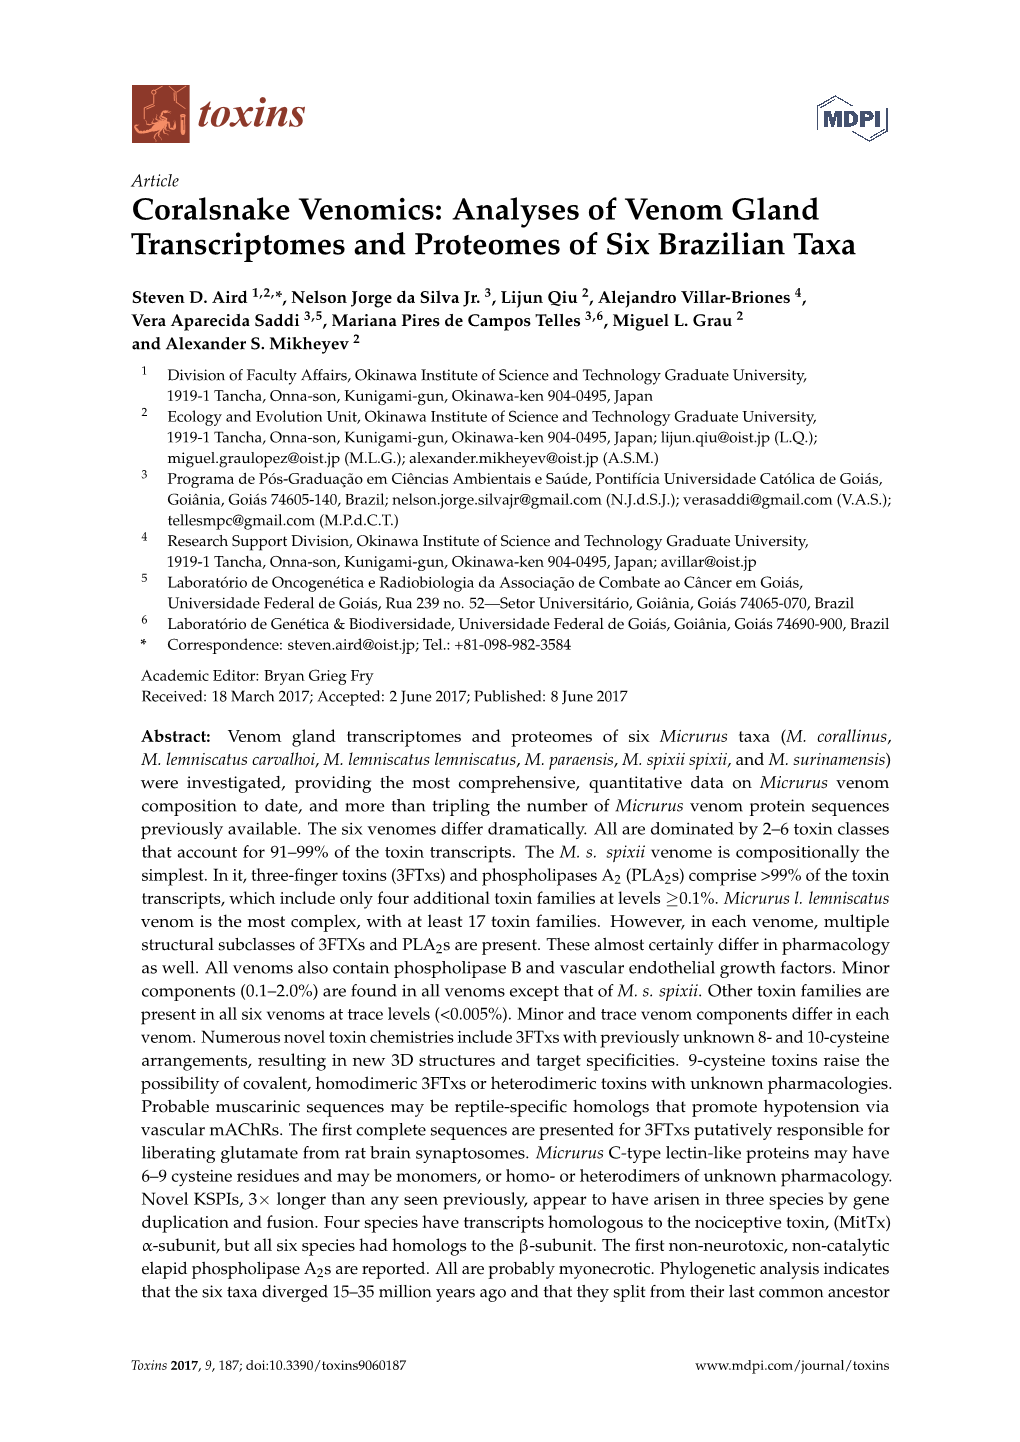 Analyses of Venom Gland Transcriptomes and Proteomes of Six Brazilian Taxa